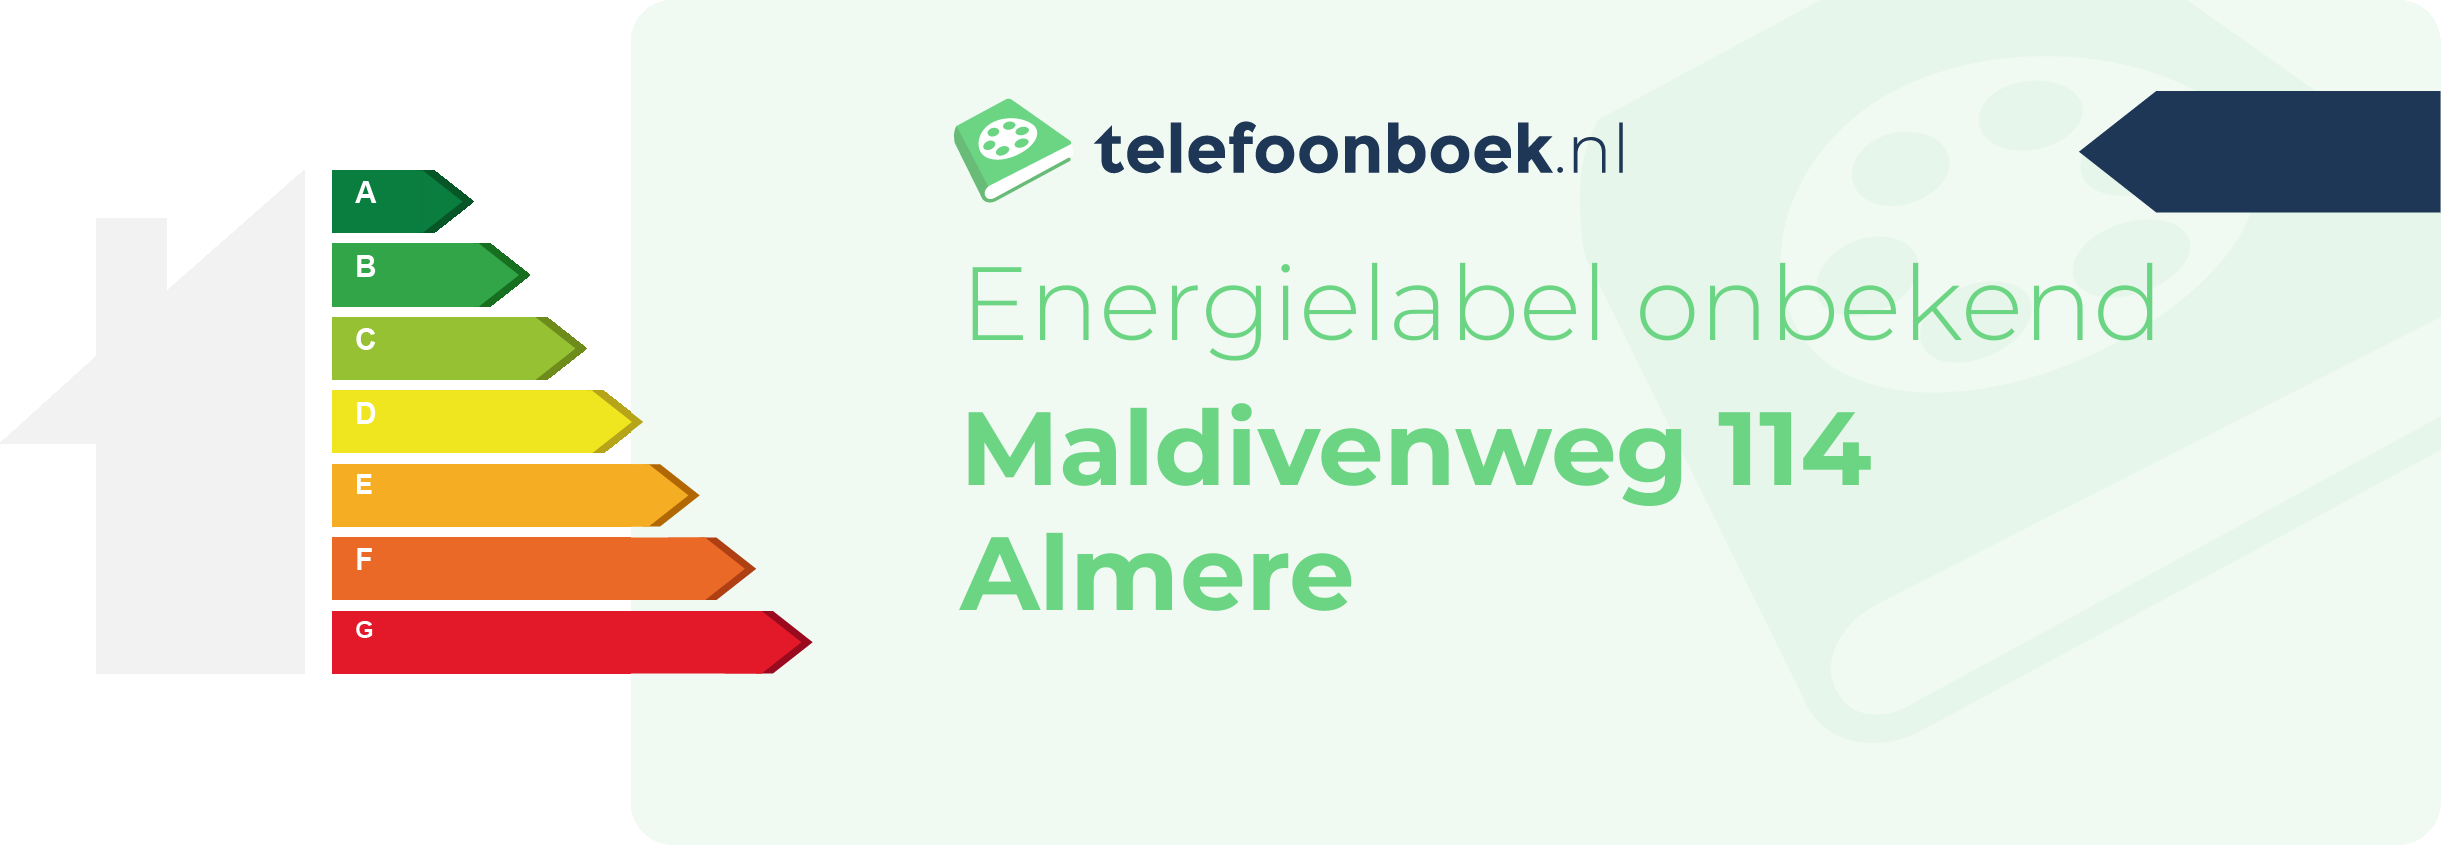 Energielabel Maldivenweg 114 Almere